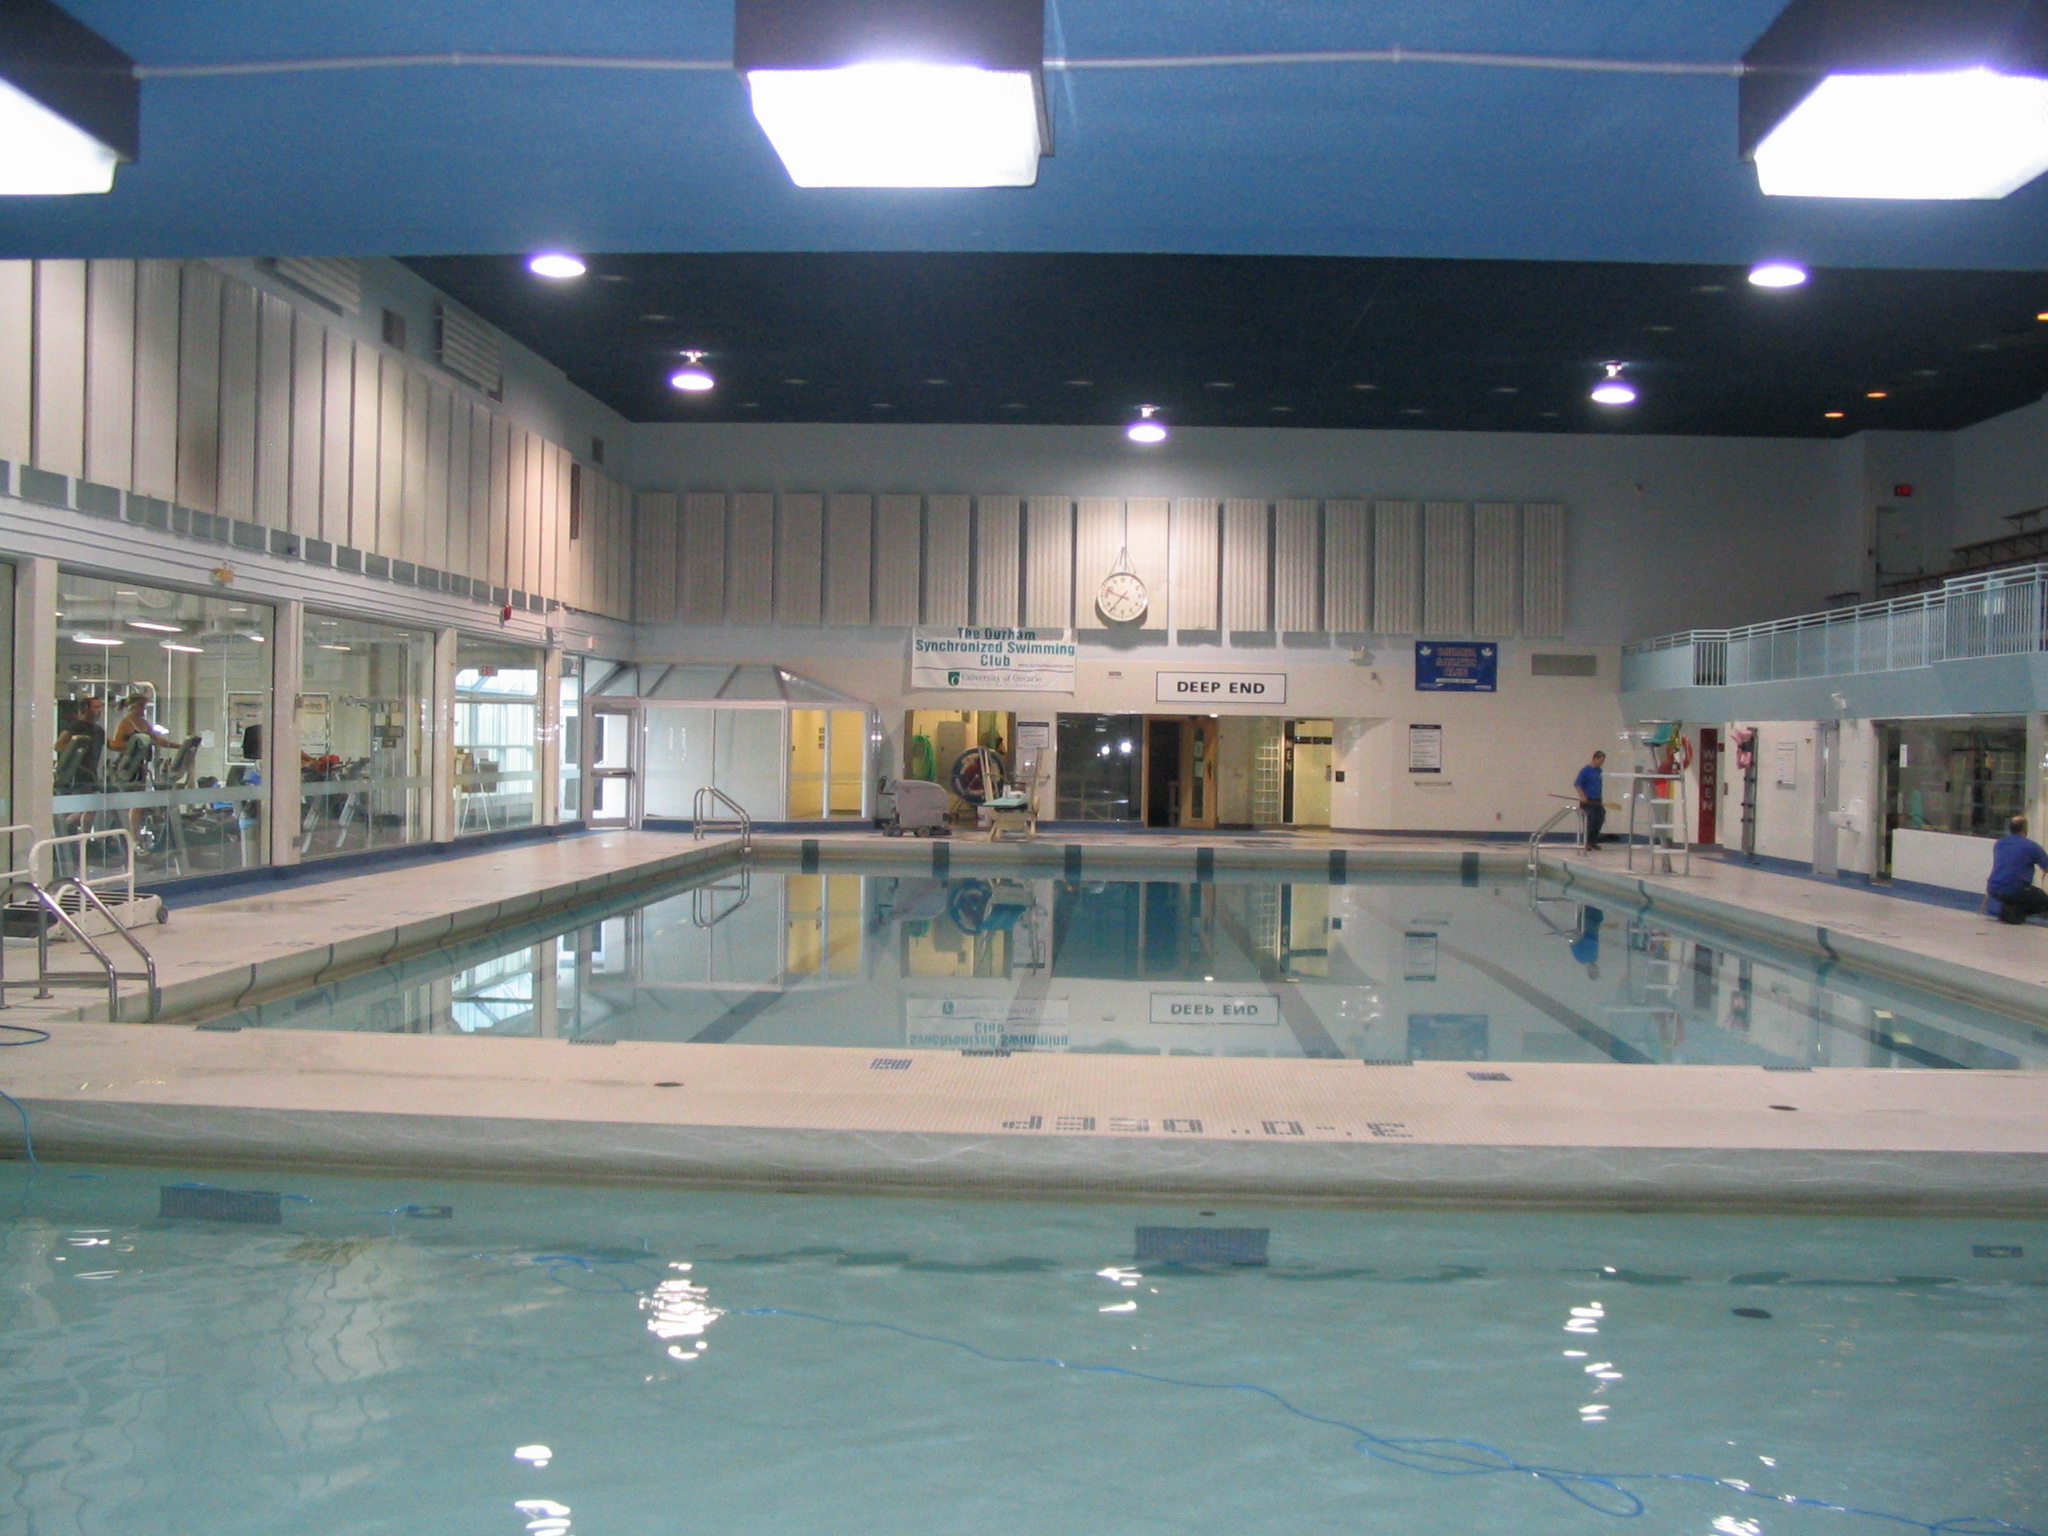 Centennial Pool